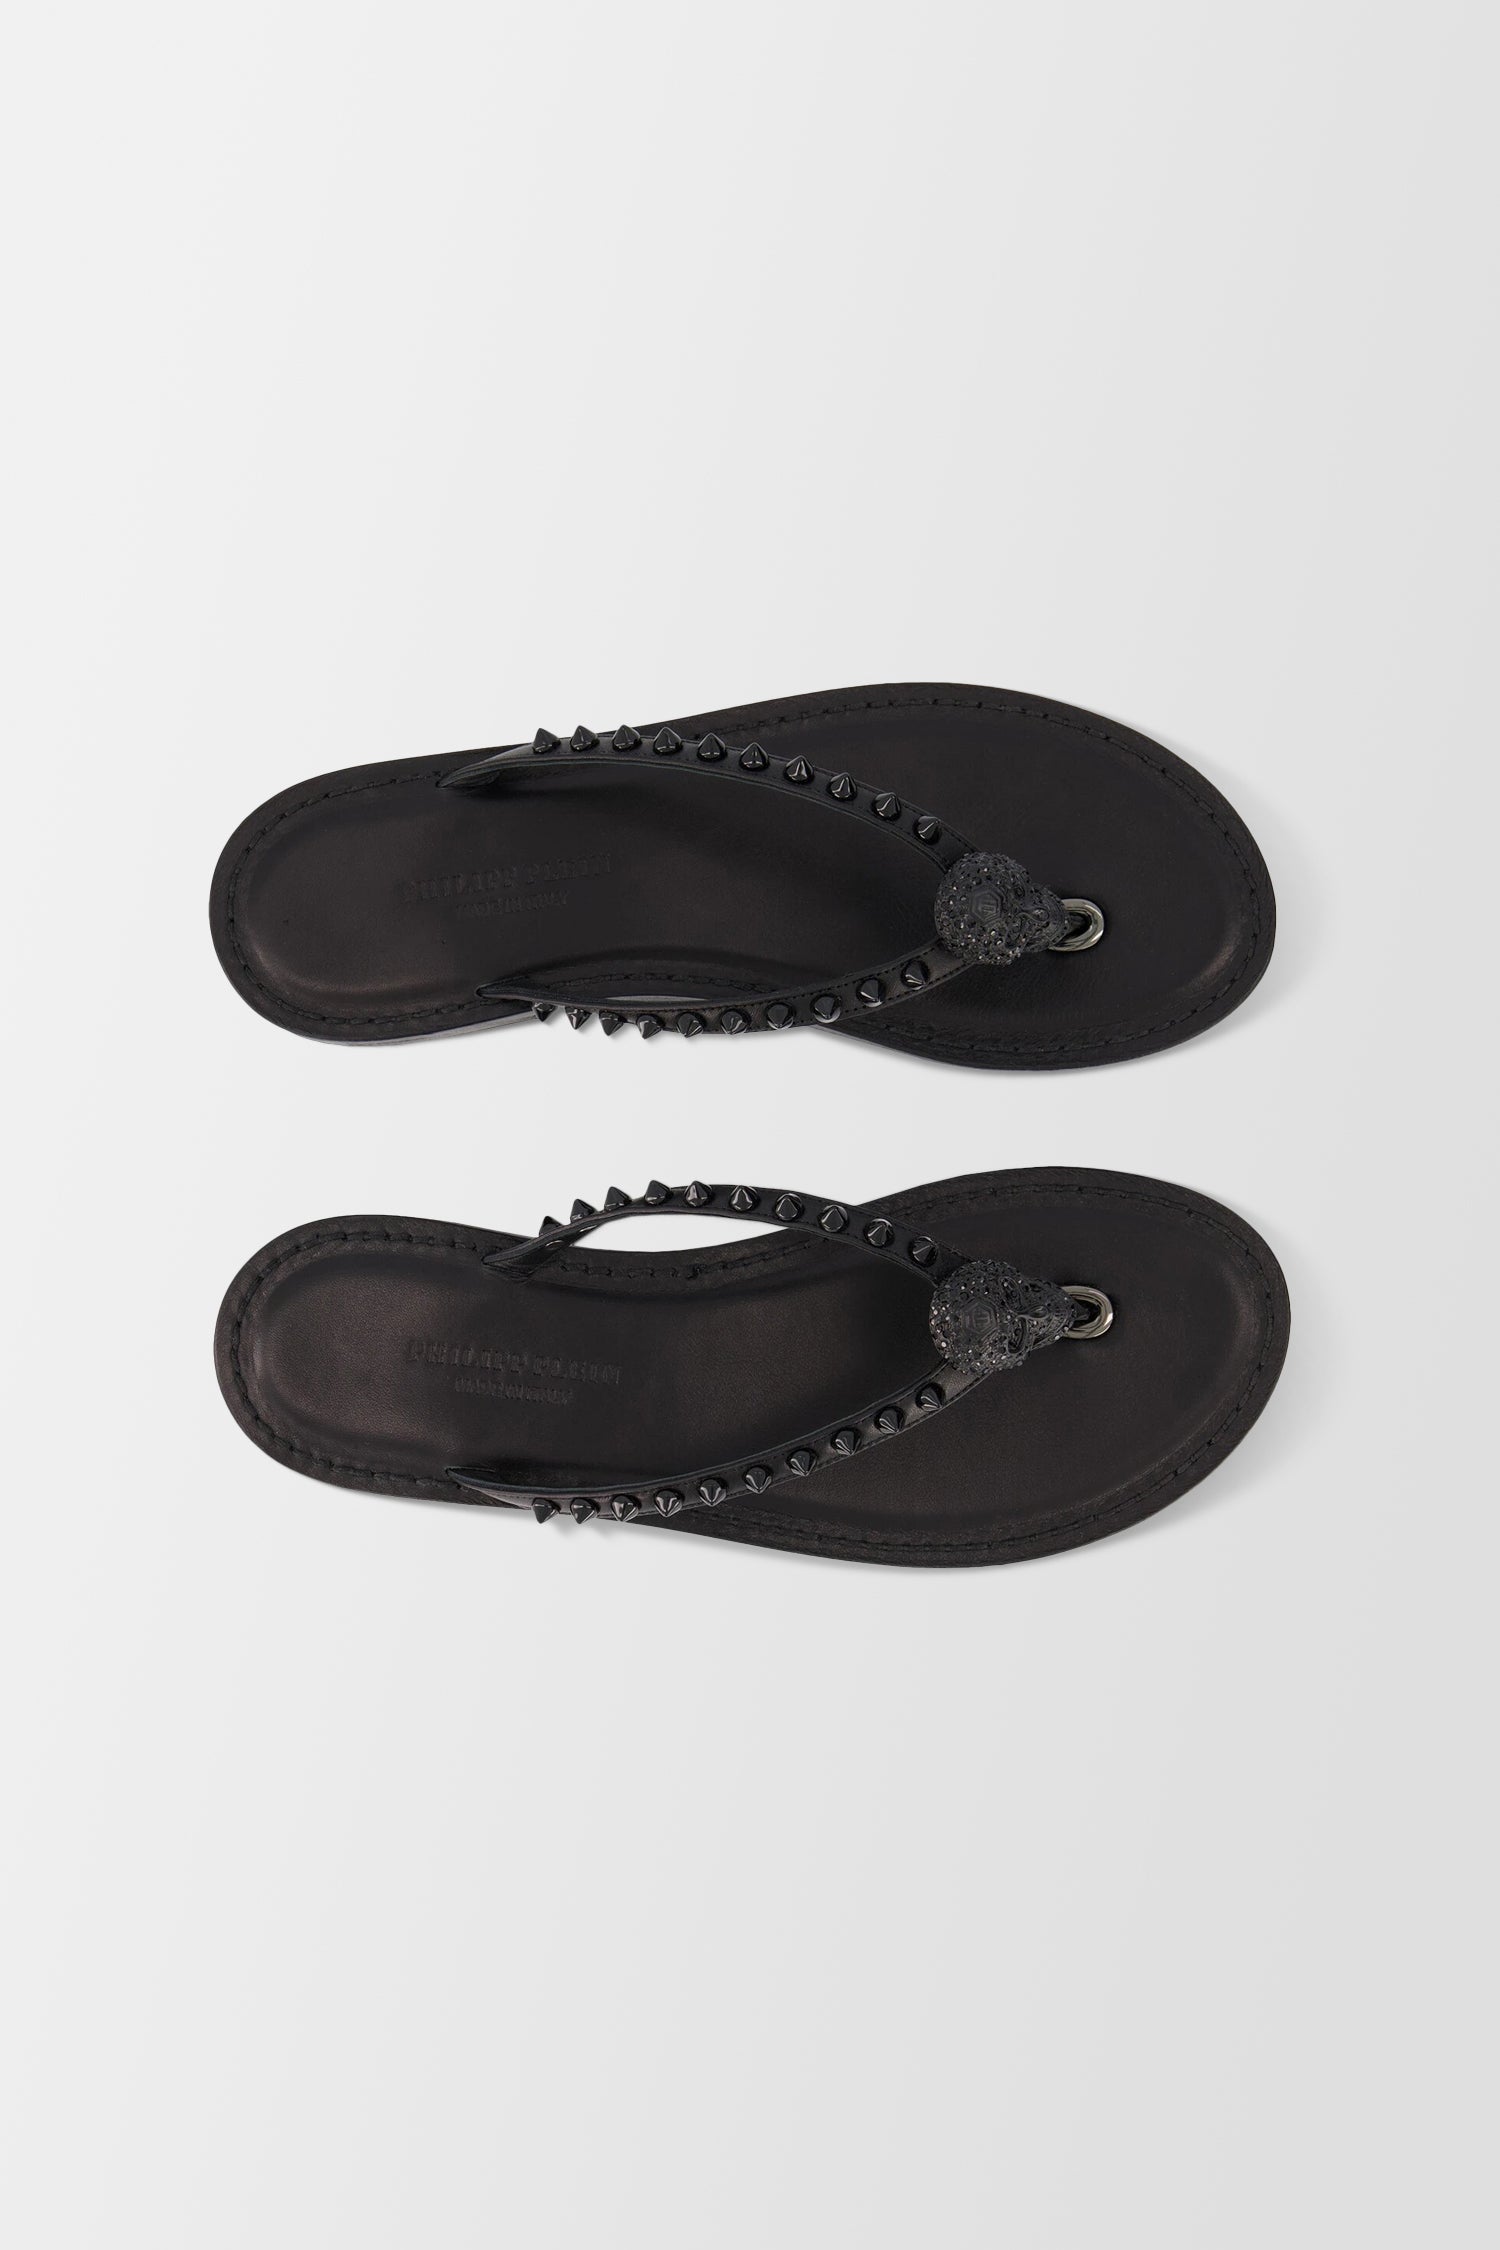 Philipp Plein Black Leather Flip Flops